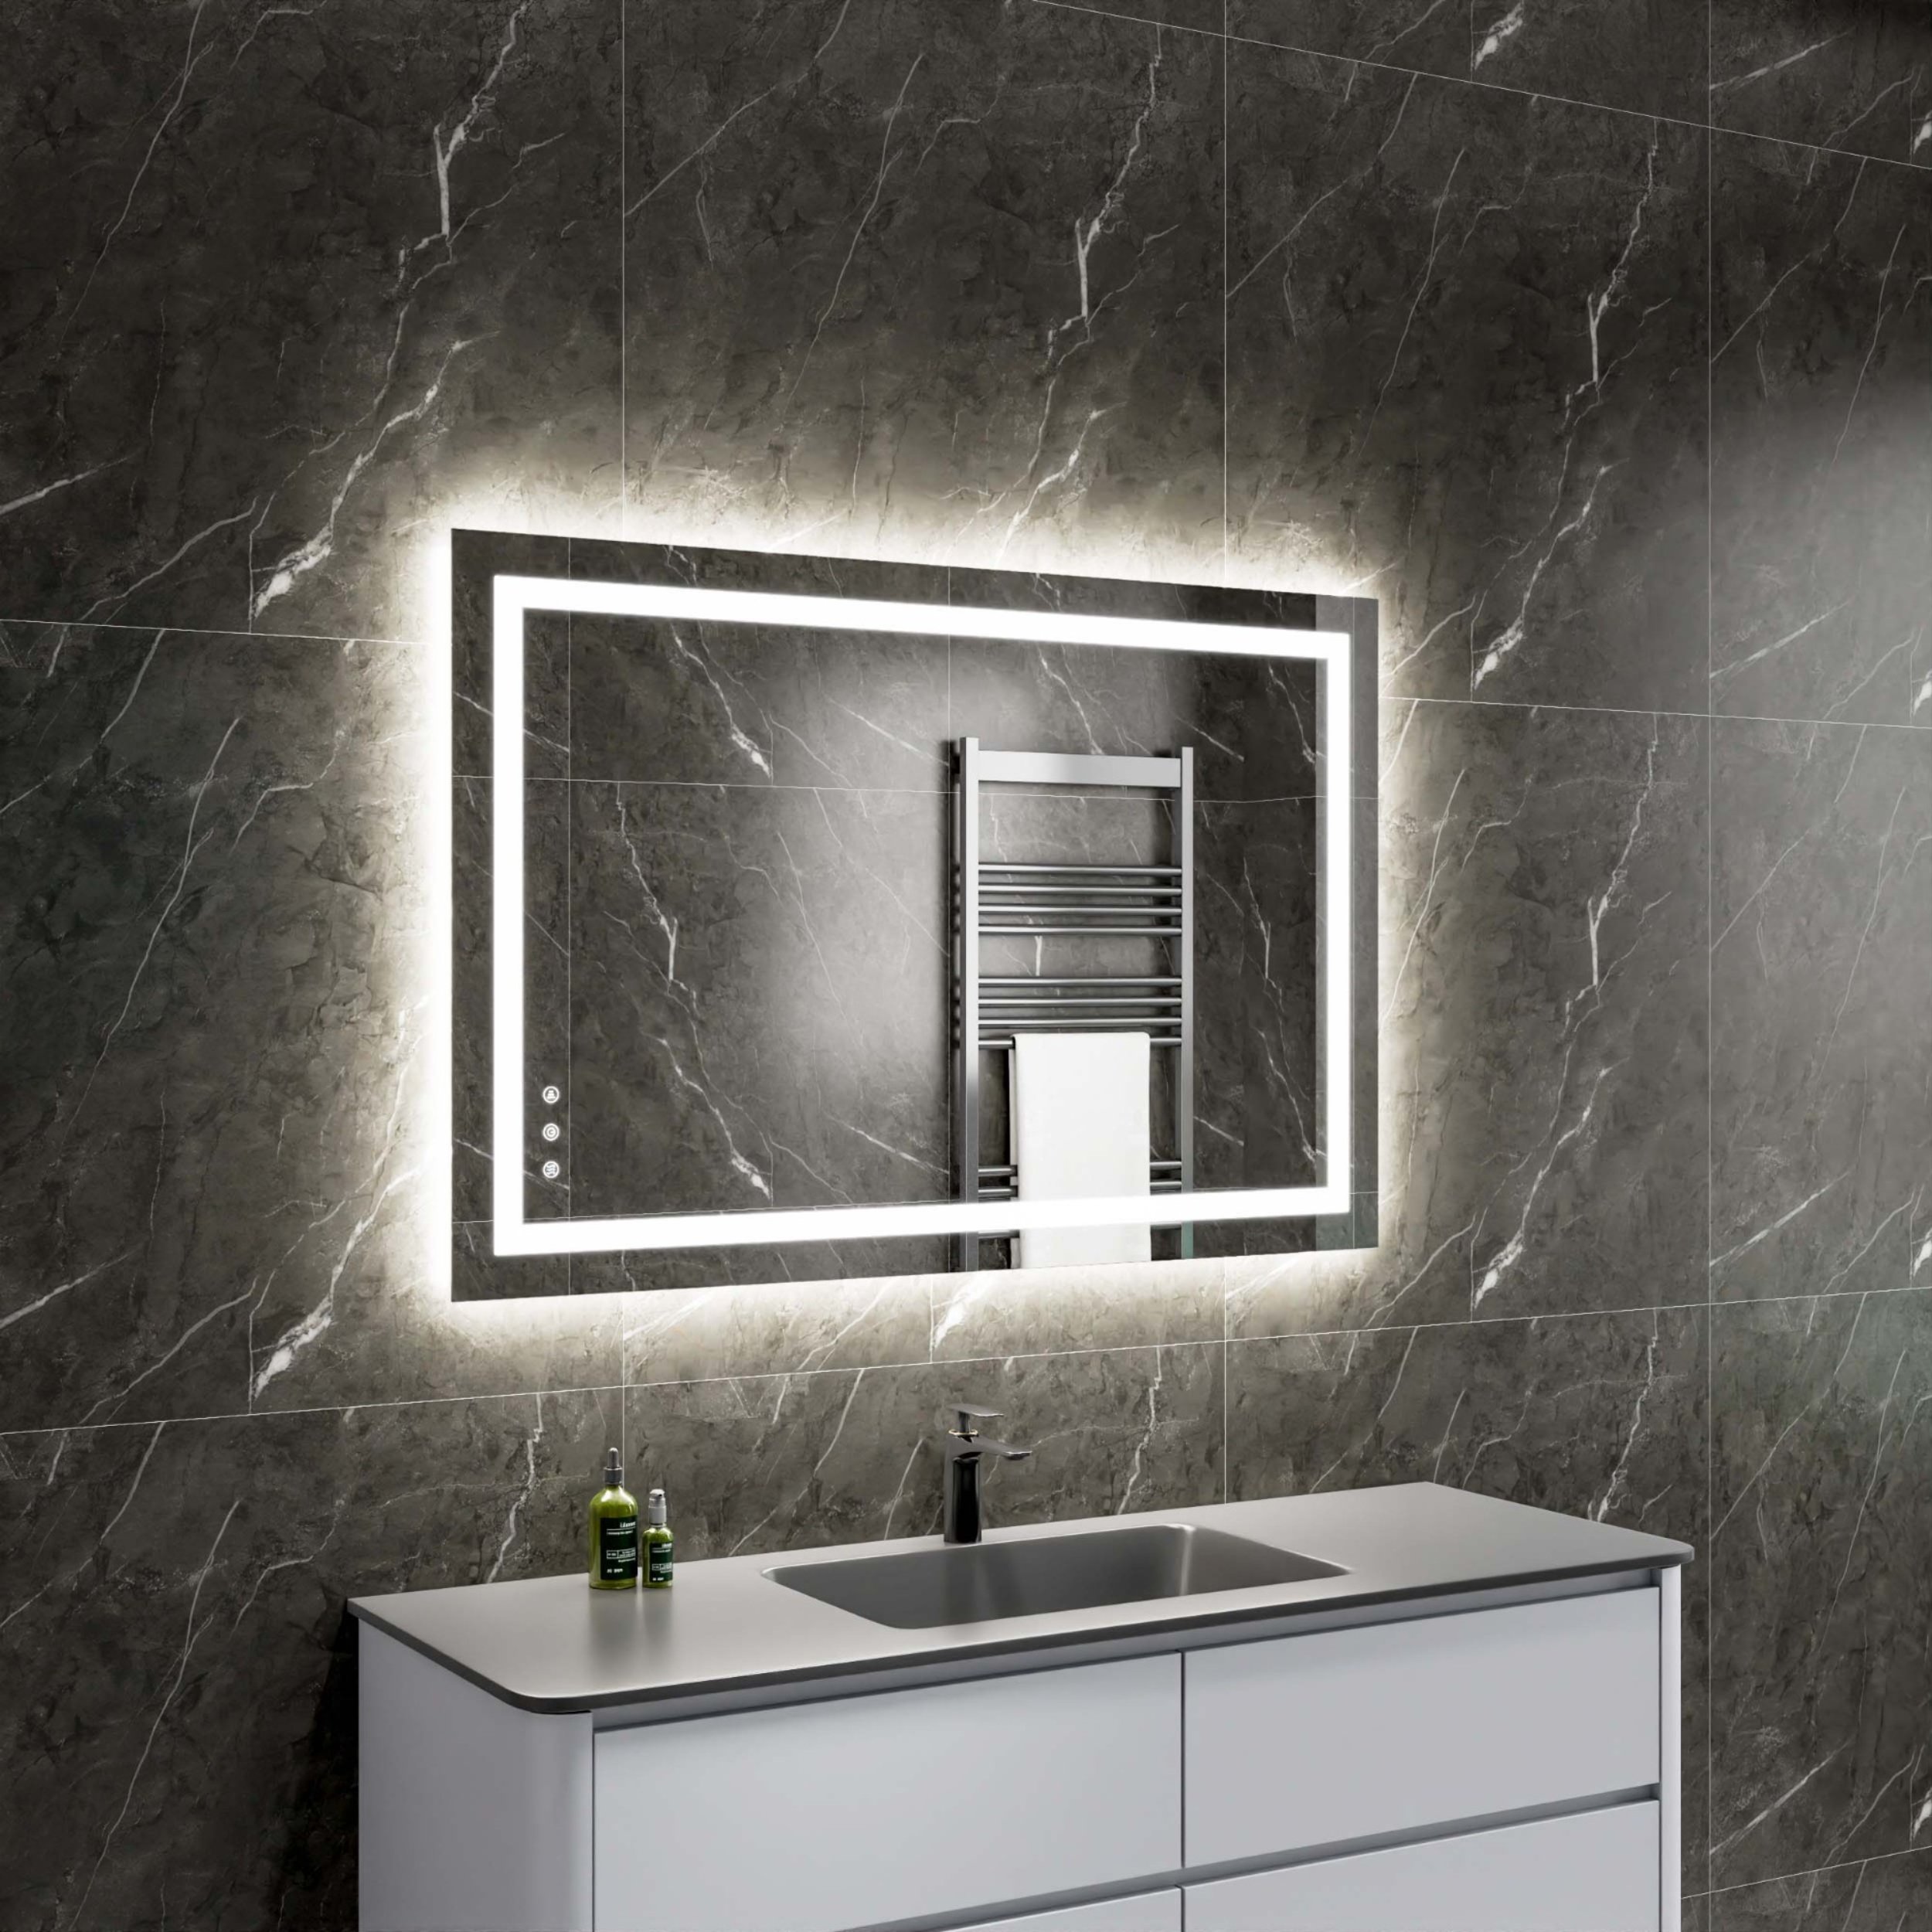 DP388 Frameless LED Bathroom Mirror - Dapai Mirror Engineering Case in the UAE